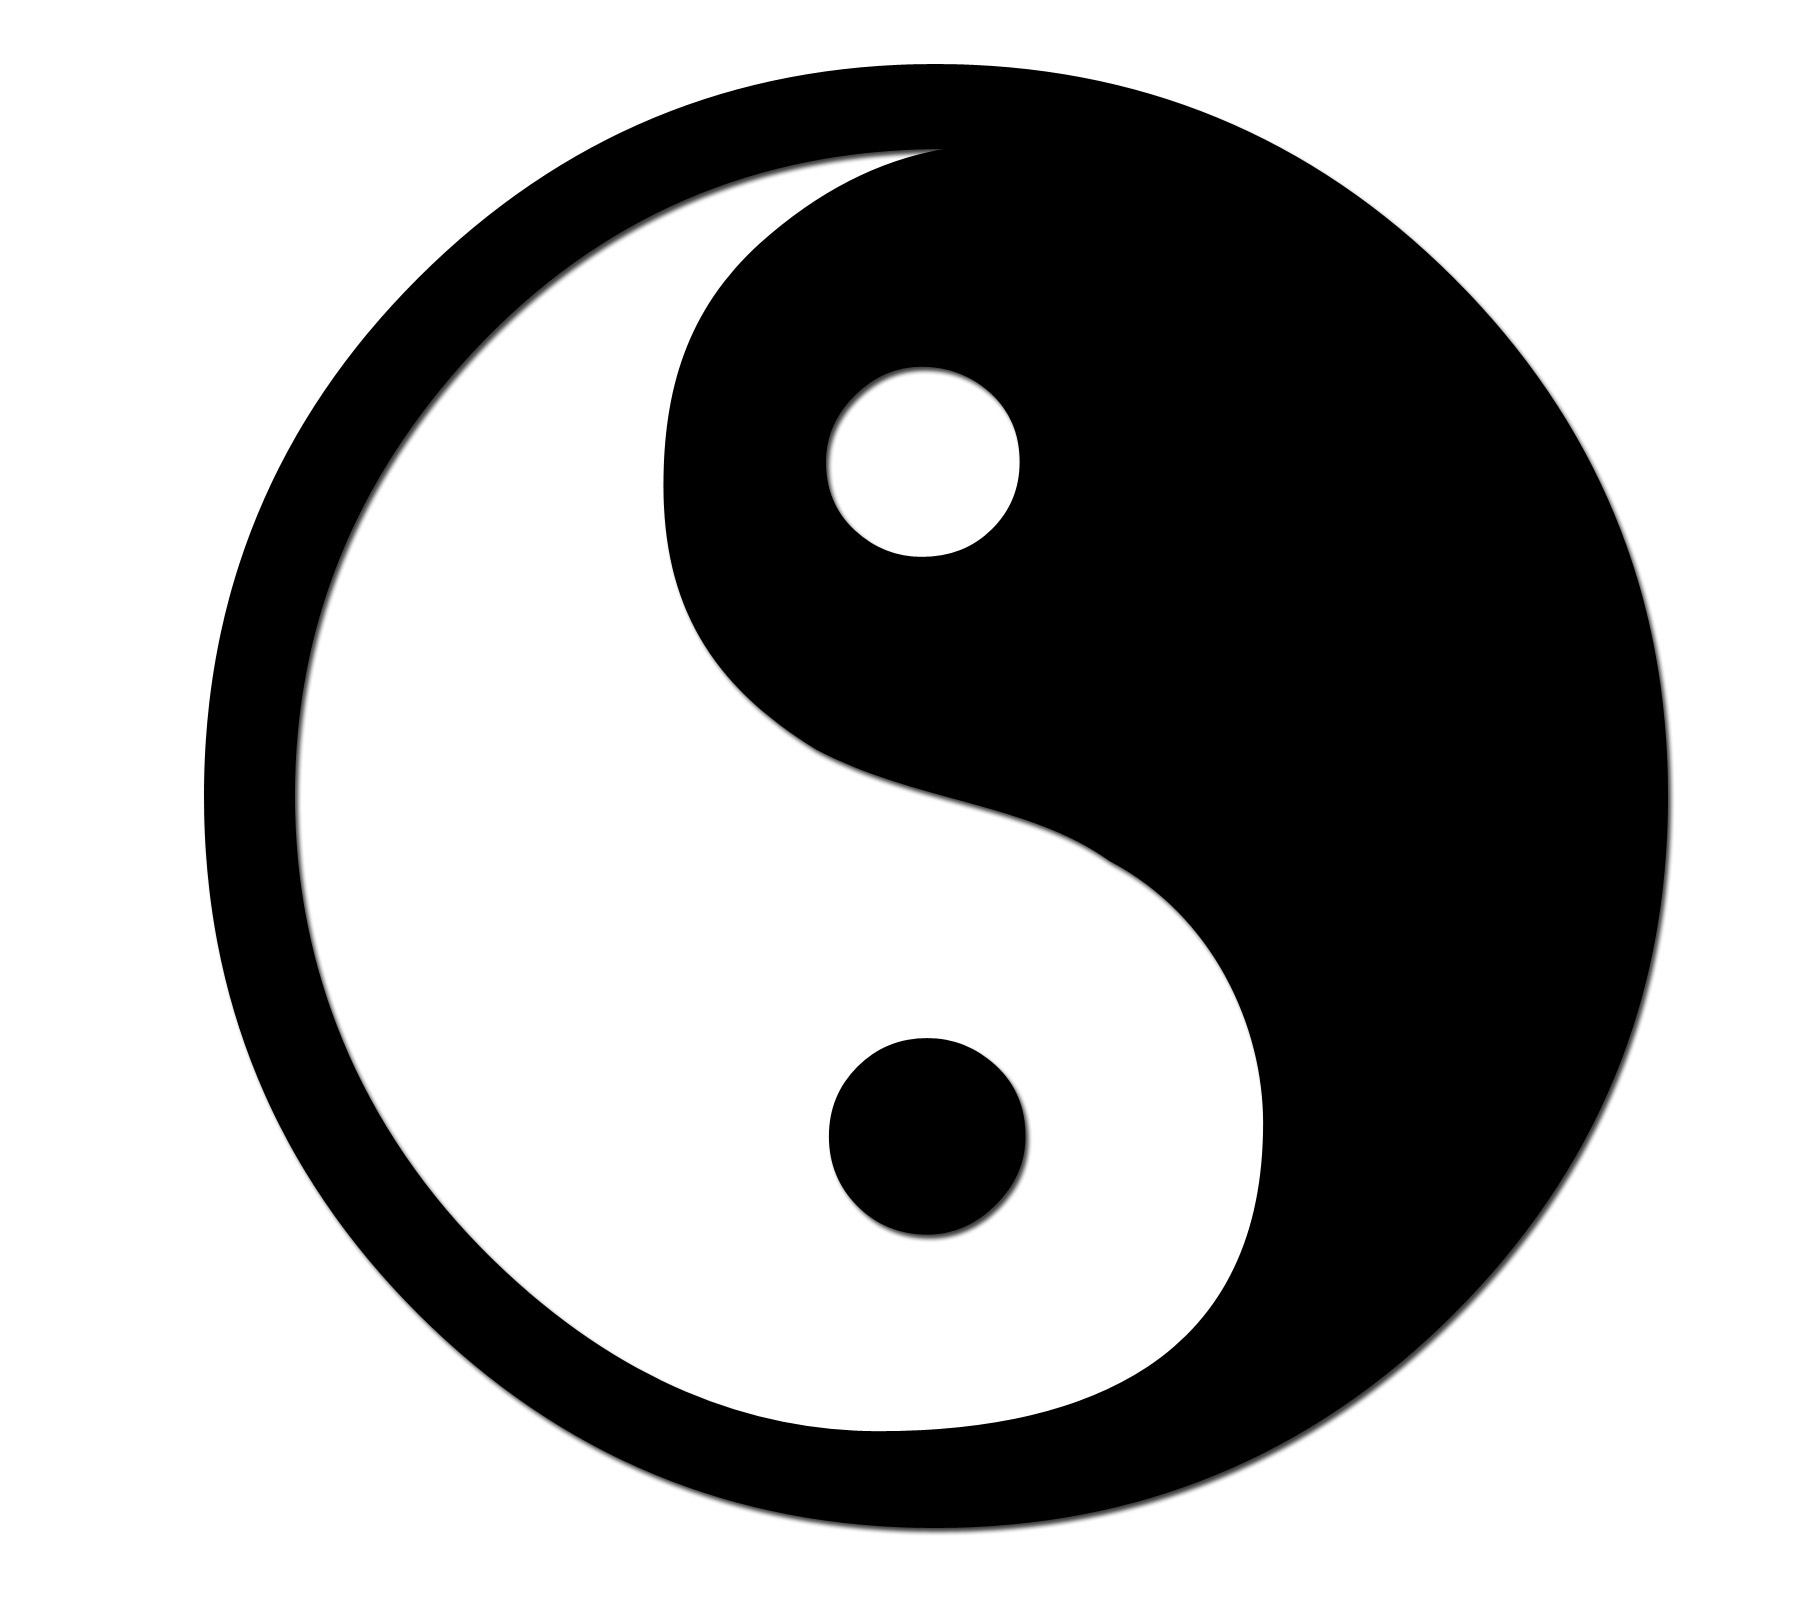 Yin yang sign clipart